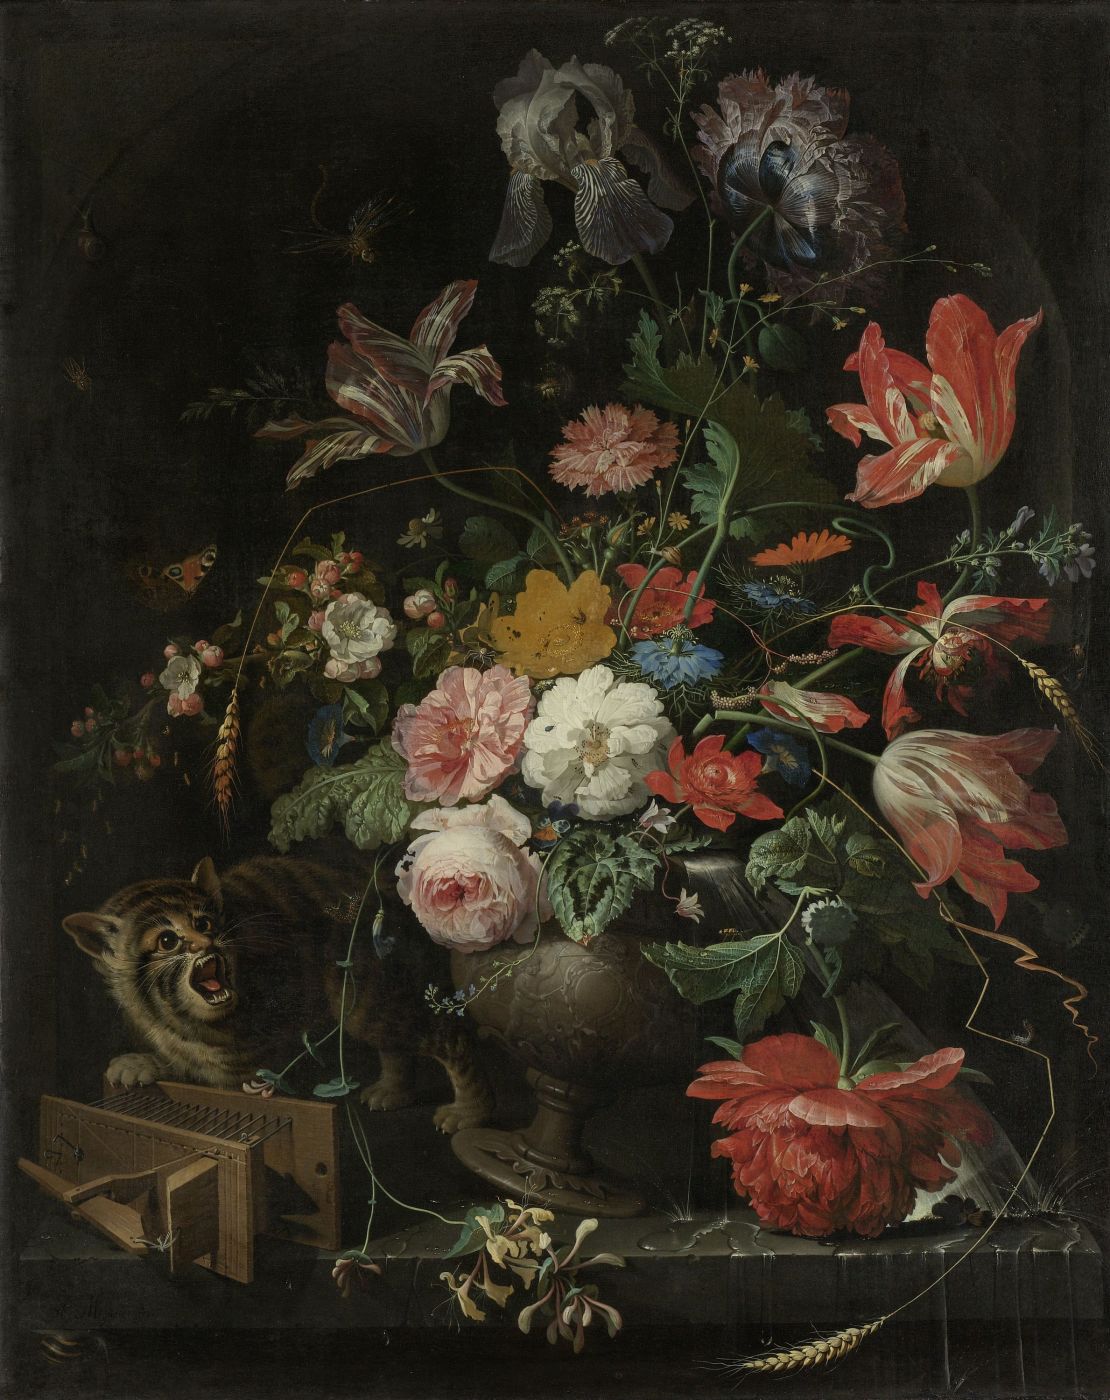 Abraham Mignon, "The Overturned Bouquet" (1660-79).